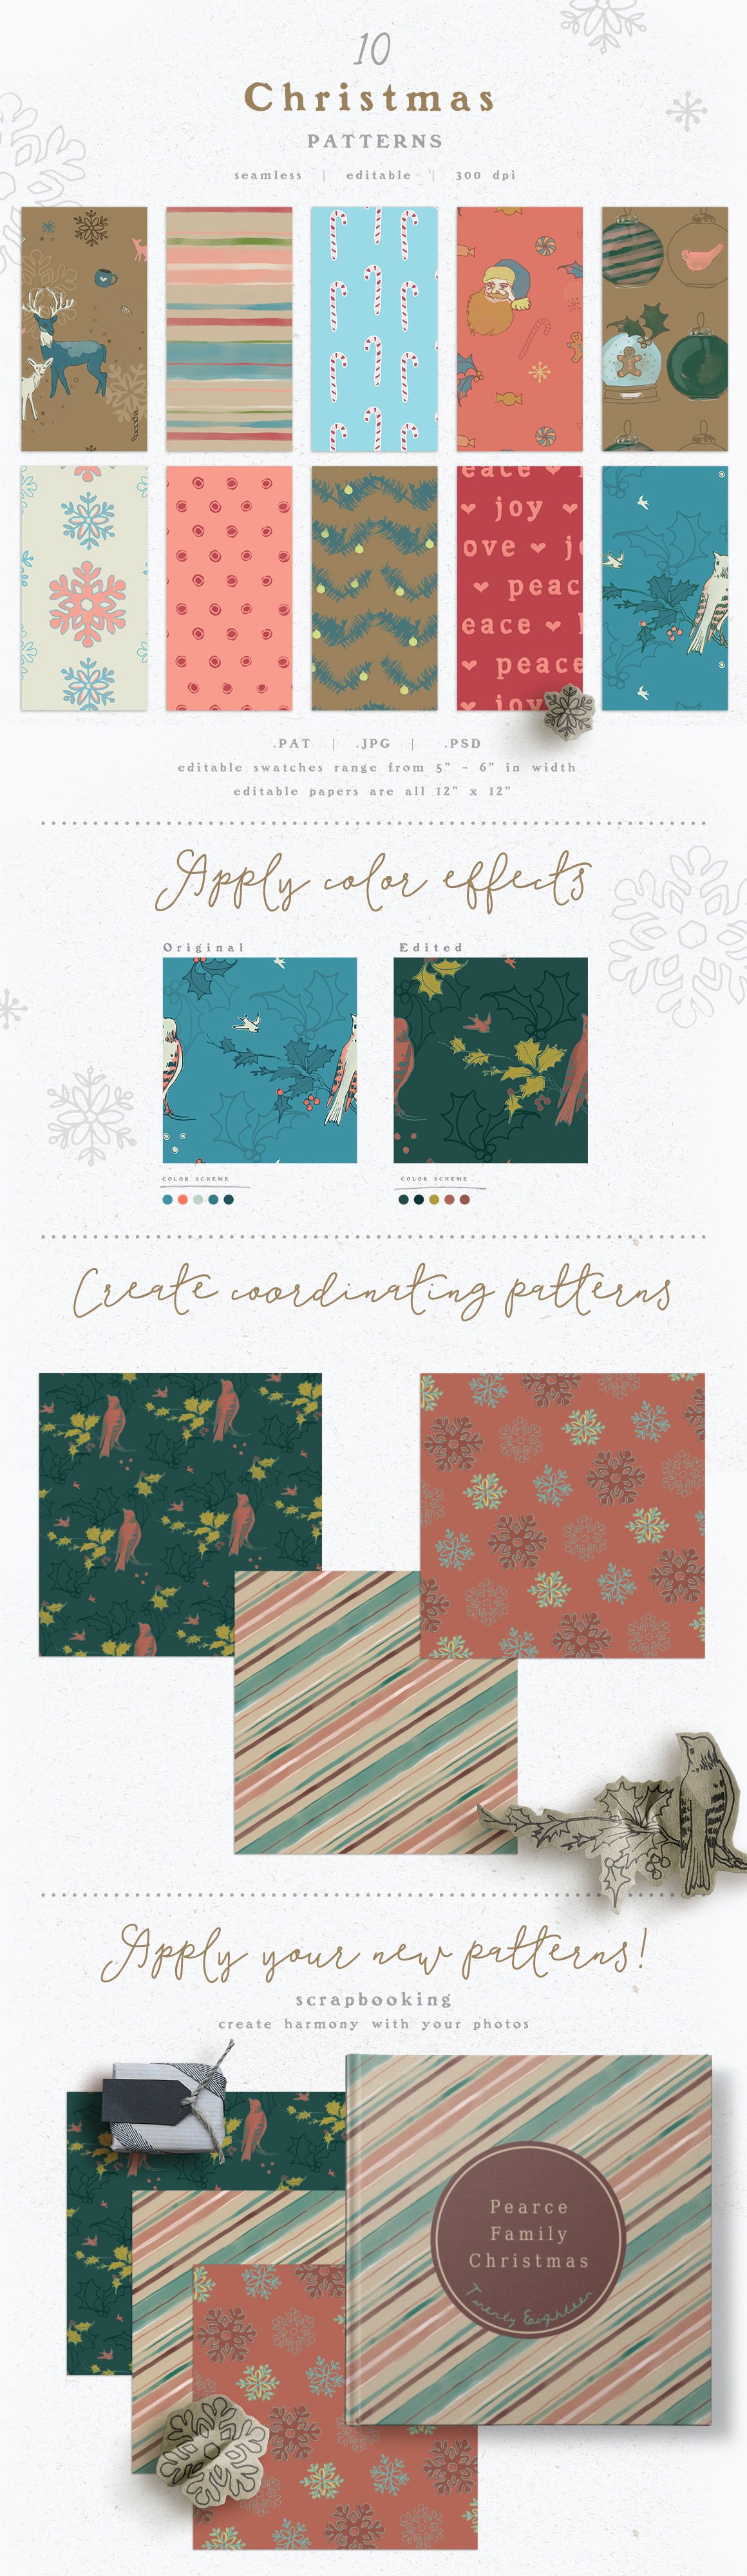 Seamless Editable Patterns - Christmas